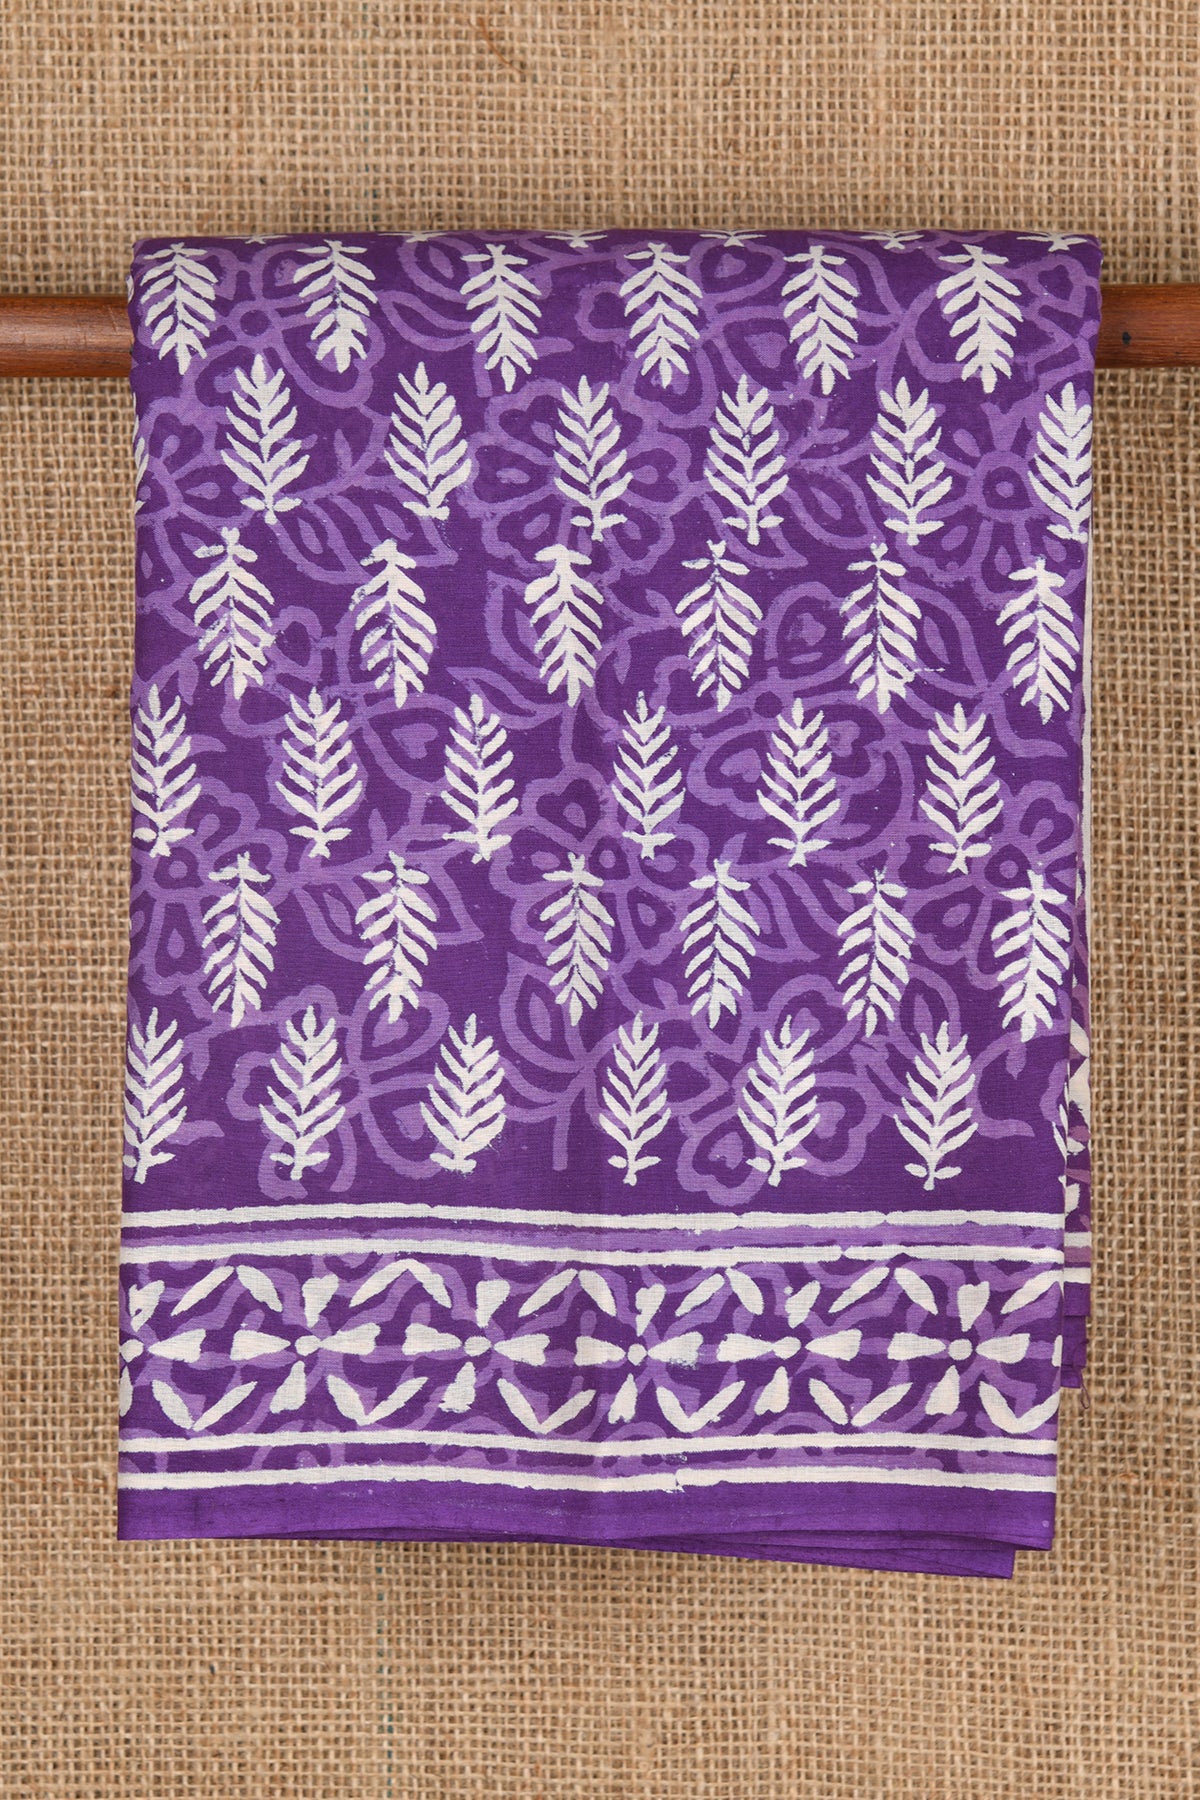 Leaf Butta Purple Jaipur Cotton Saree